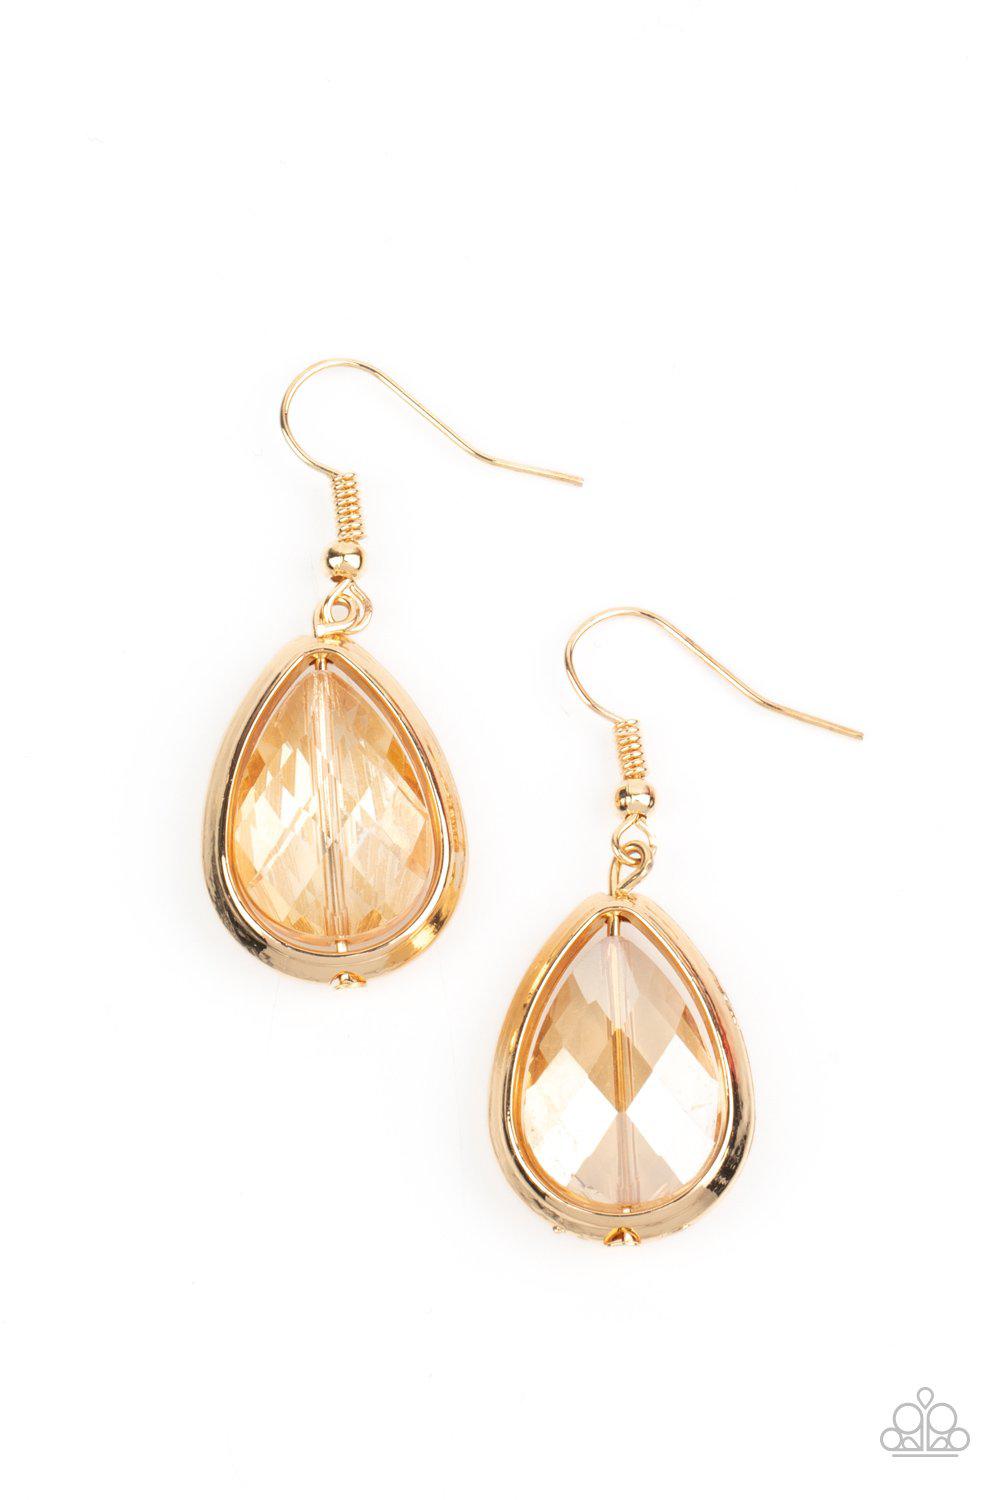 Drop-Dead Duchess Gold Rhinestone Earrings - Paparazzi Accessories- lightbox - CarasShop.com - $5 Jewelry by Cara Jewels